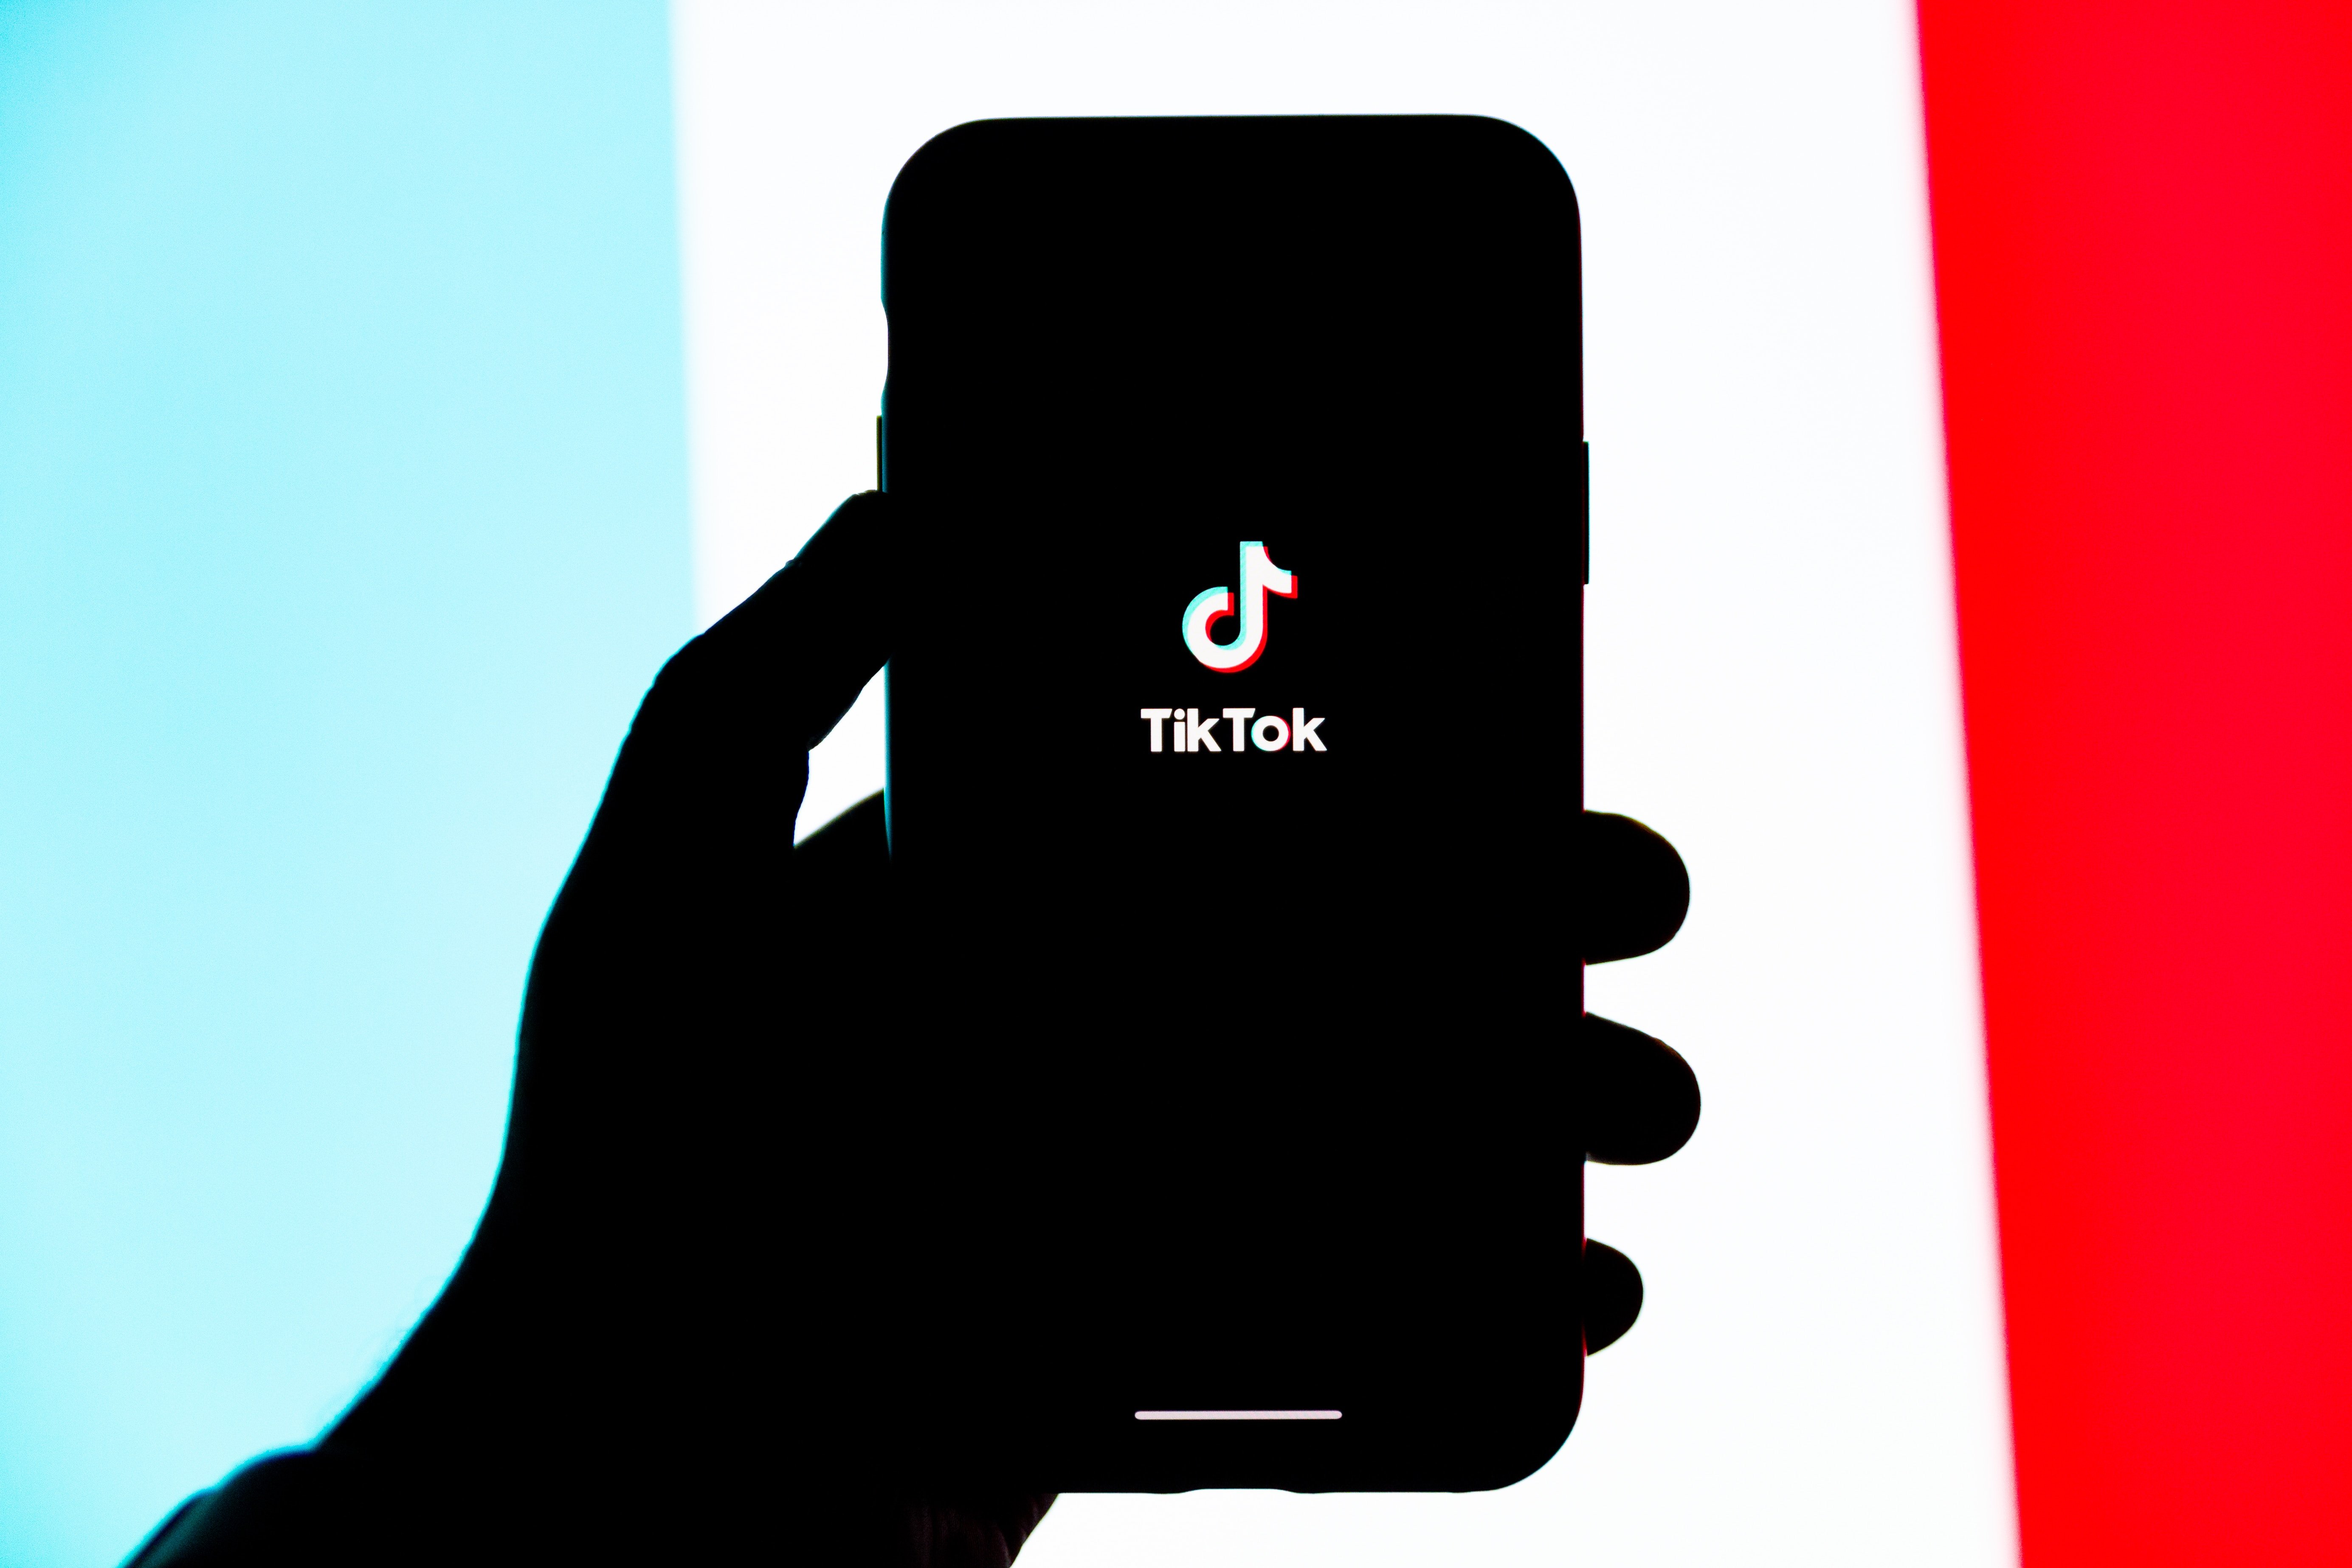 La interfície de TikTok ja està disponible en català